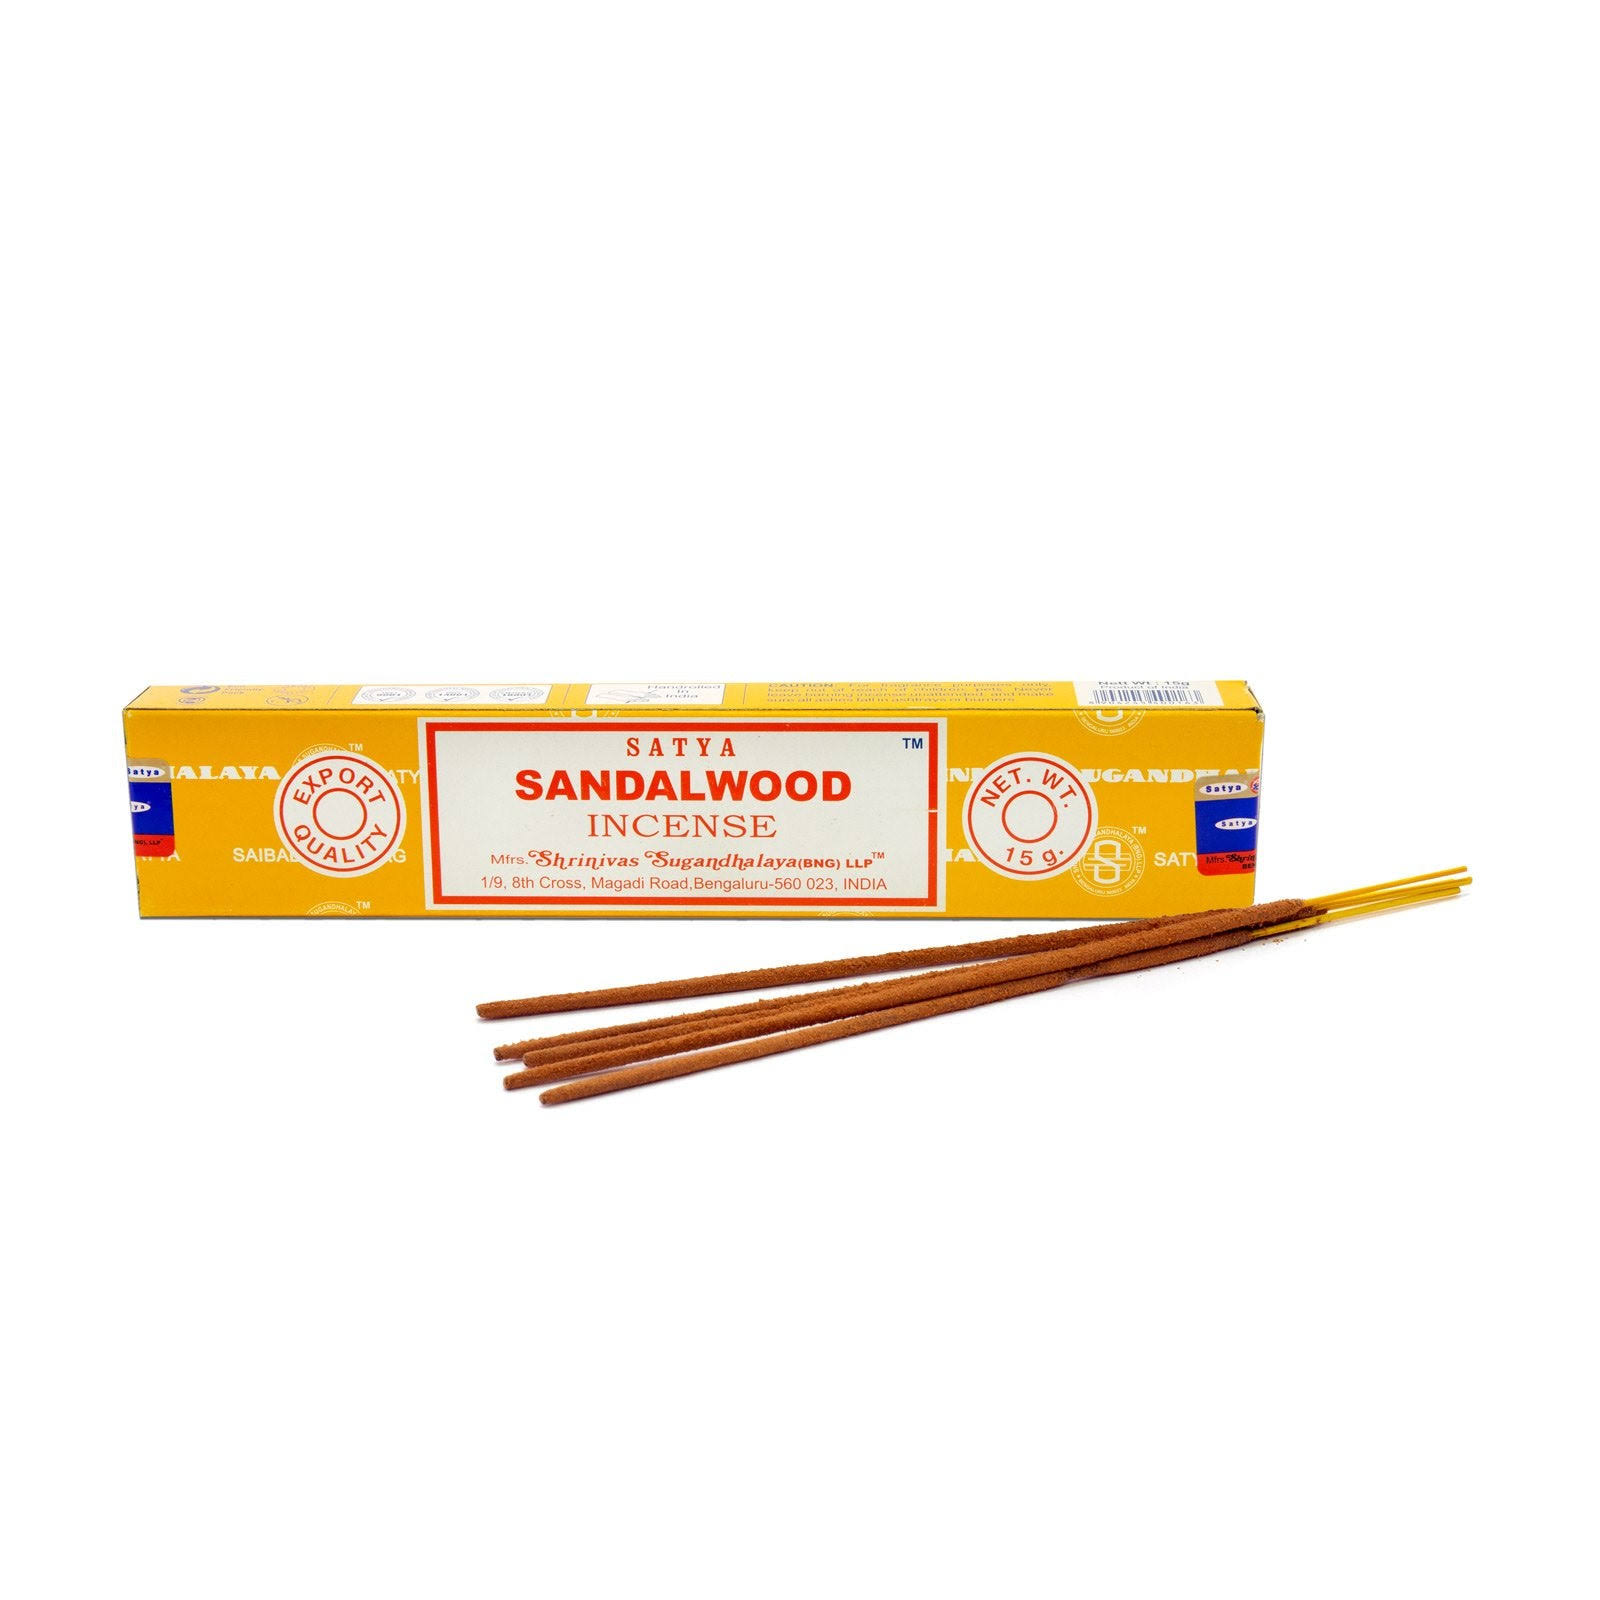 Satya 15g Incense Sticks, Sandalwood